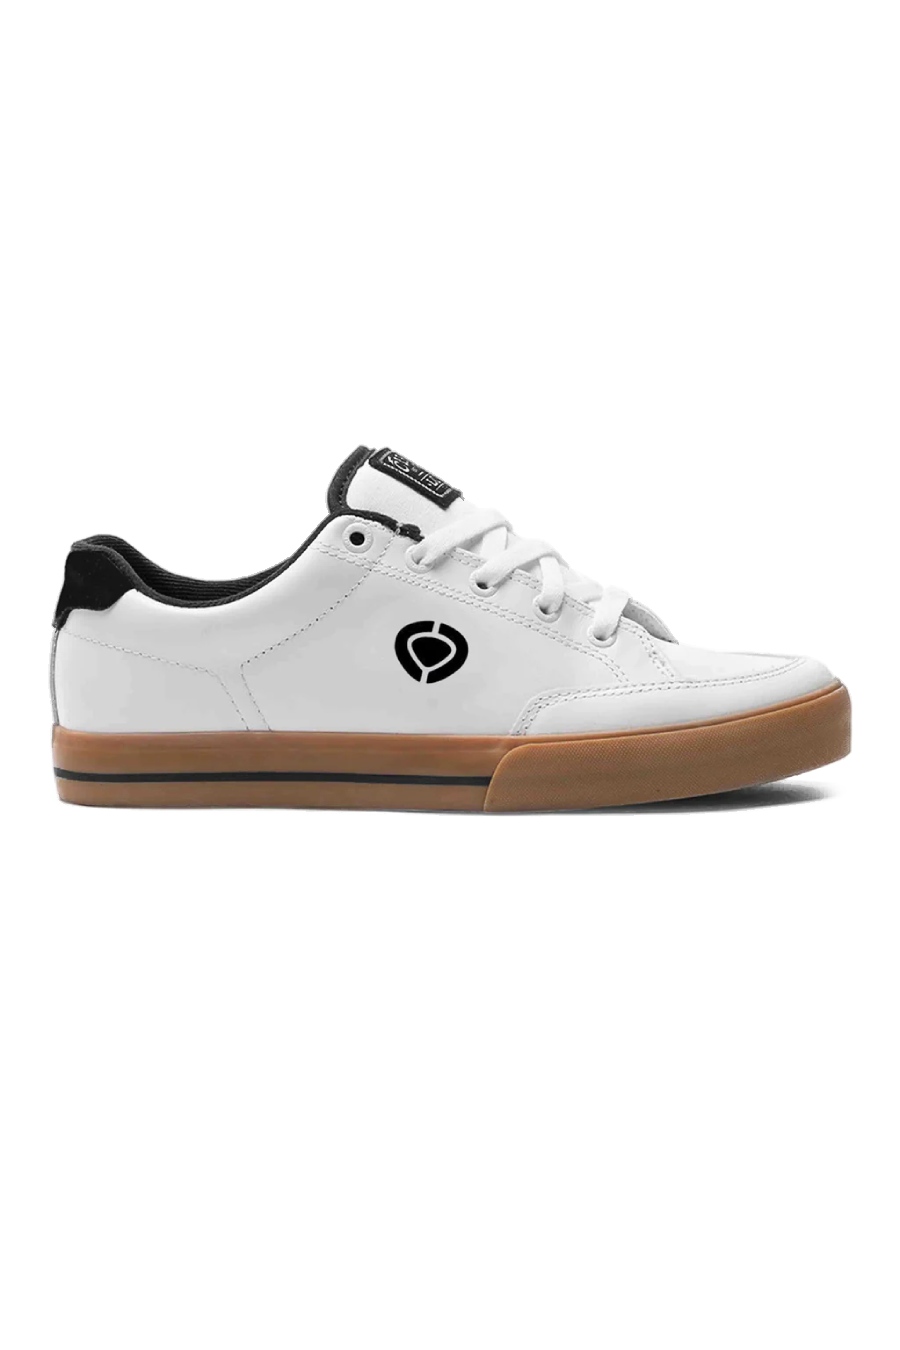 CIRCA Sneakers C1RCA AL50 SLIM WHITE/GUM - ΜΠΕΖ-C1RCA000032206-322-BEIGE 18251